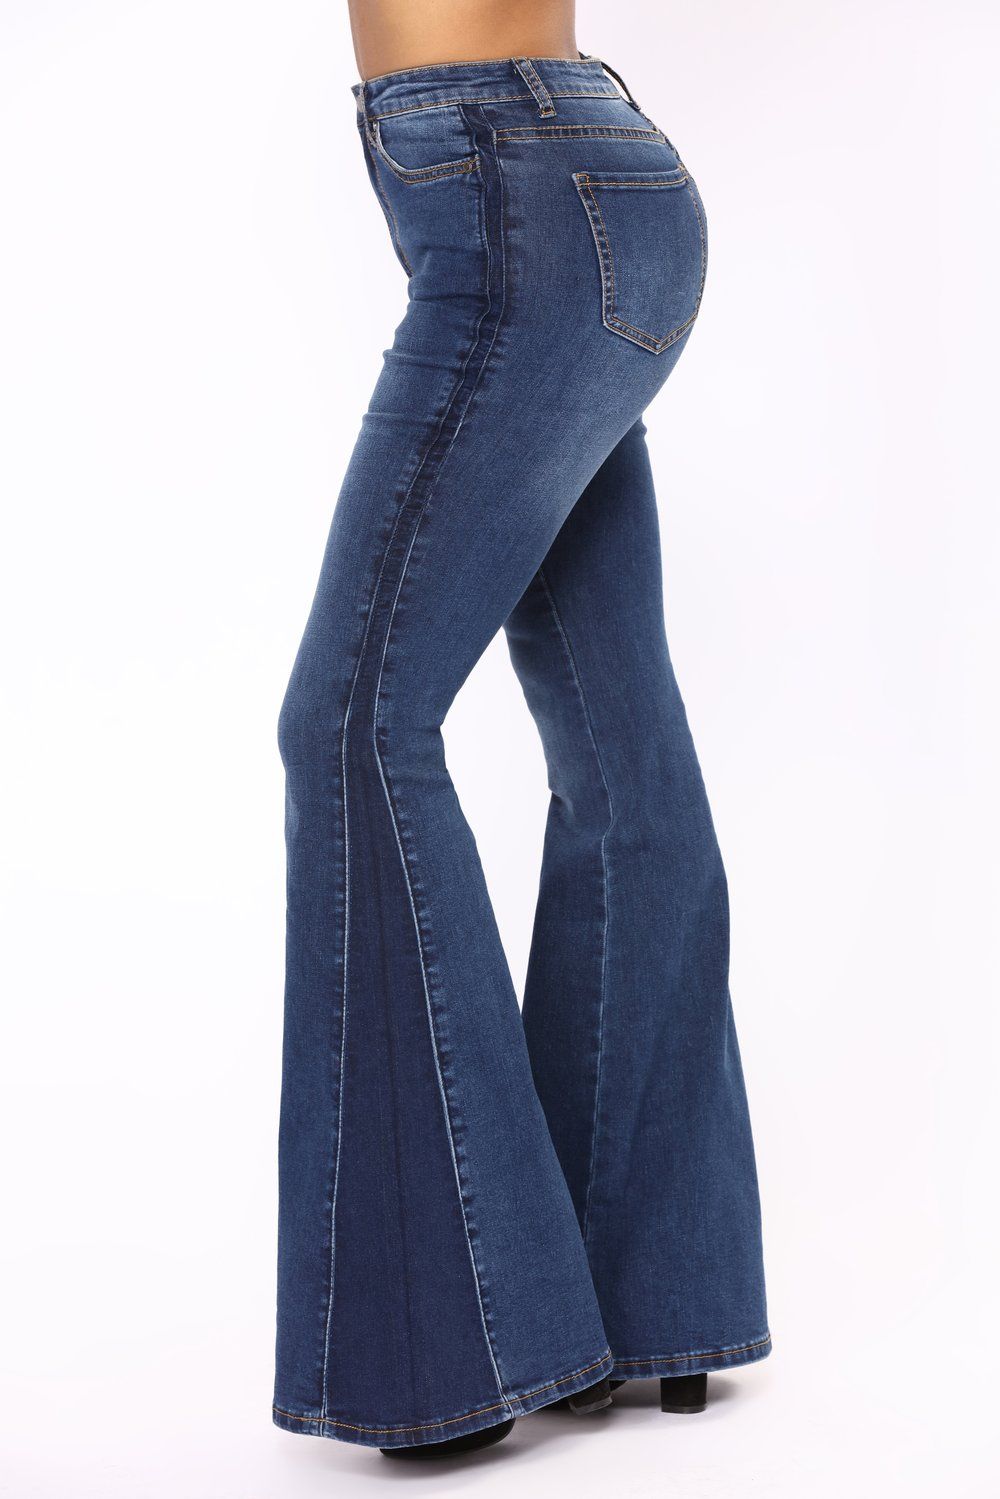 fashion nova bell bottom jeans